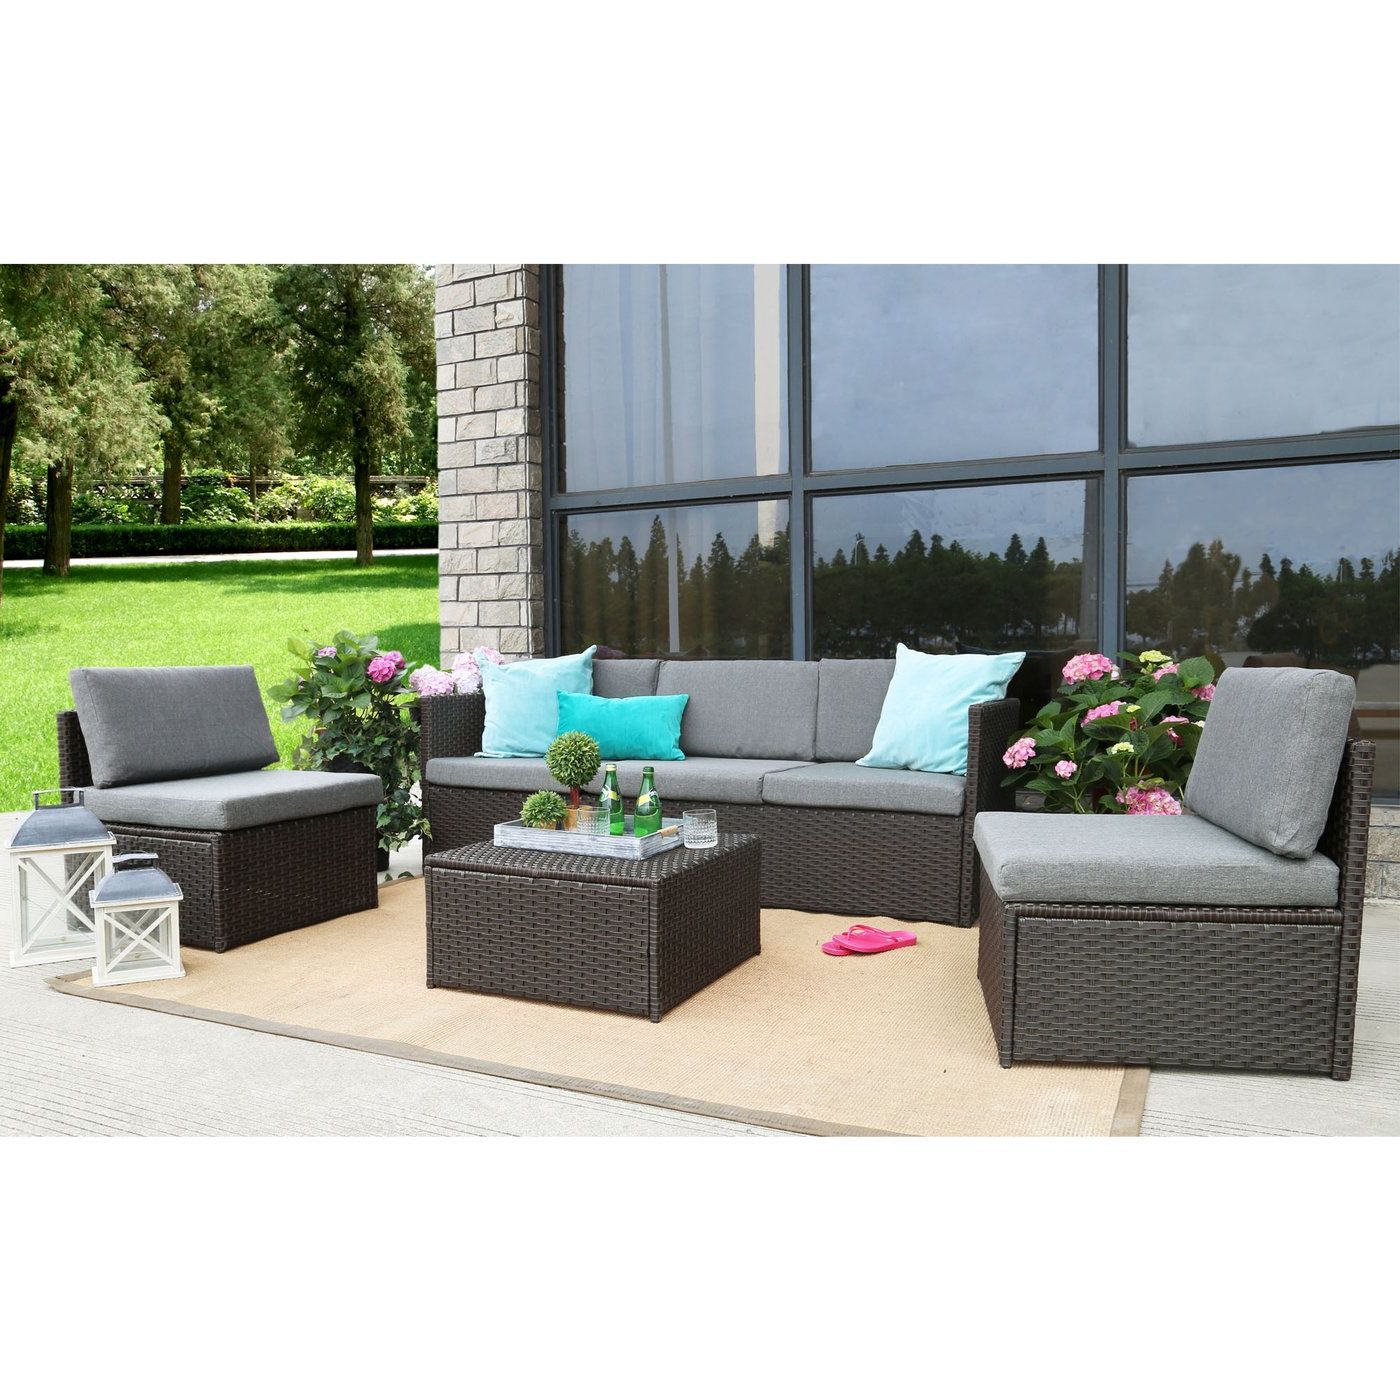 4 Piece Outdoor Seating Patio Sets Regarding Preferred Baner Garden K16ch 4 Piece Complete Outdoor Furniture Seating Patio (View 8 of 15)